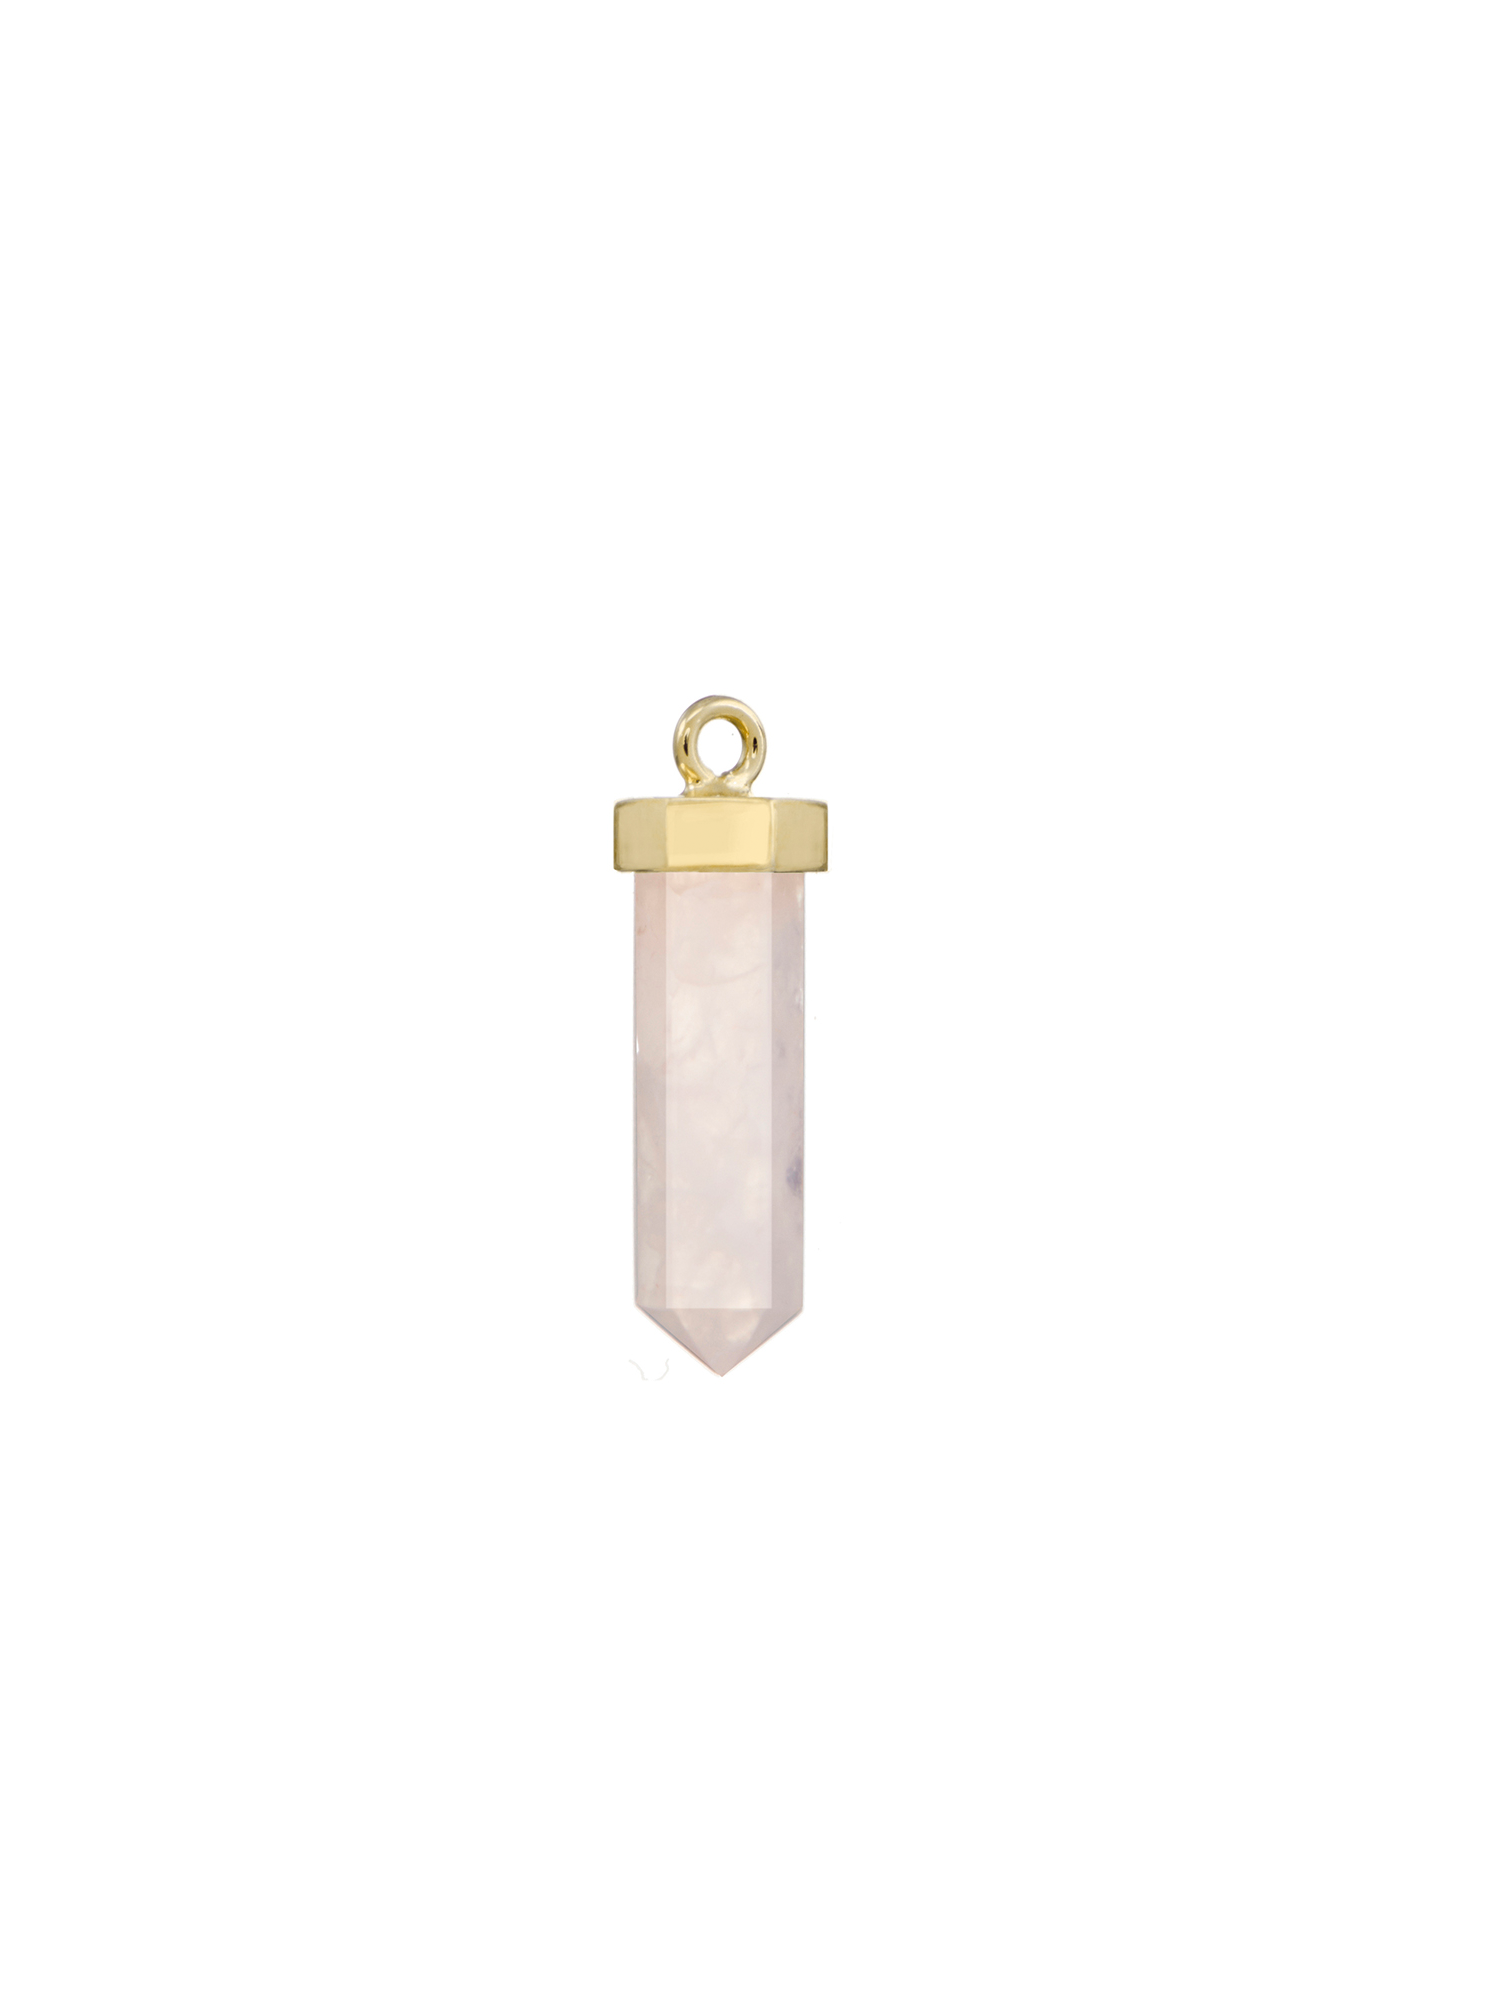 fire flies #2 earring charm | rose quartz